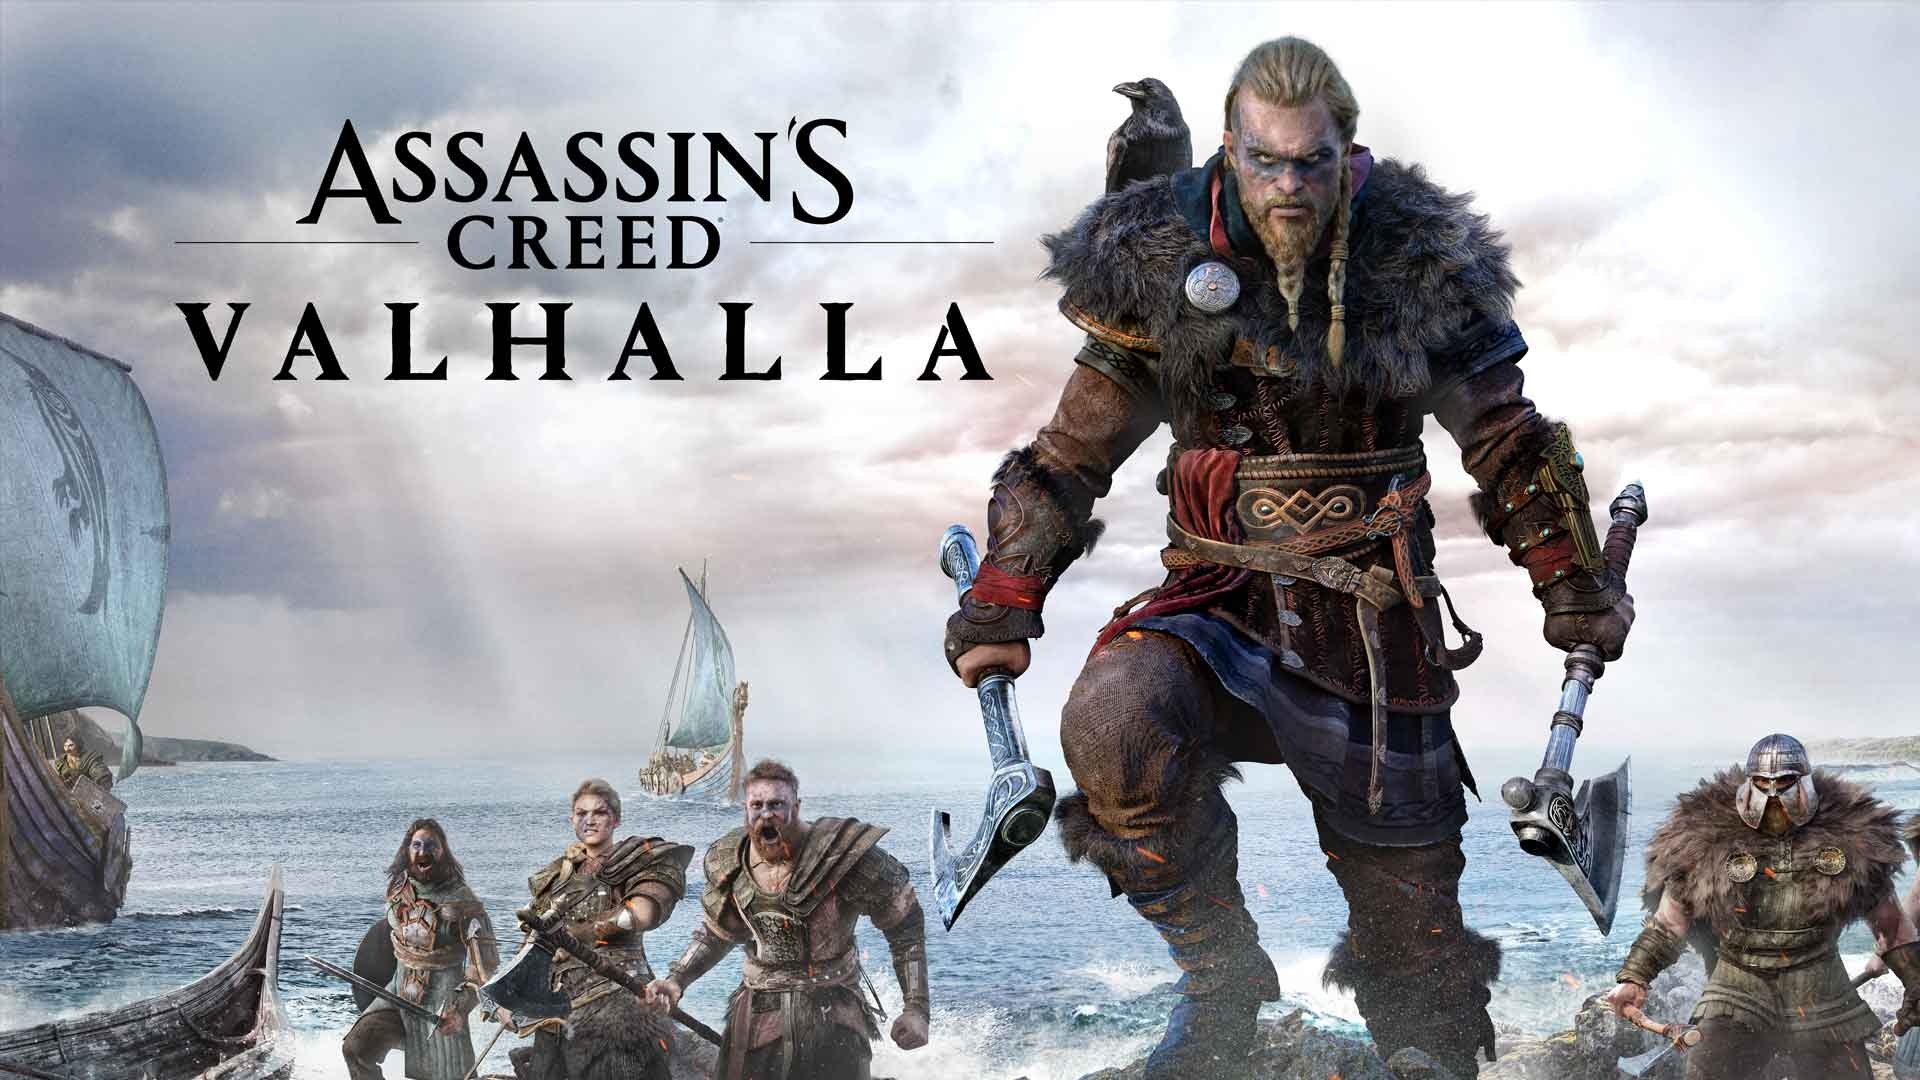 Assassin's Creed Origins Season Pass - Epic Games Store